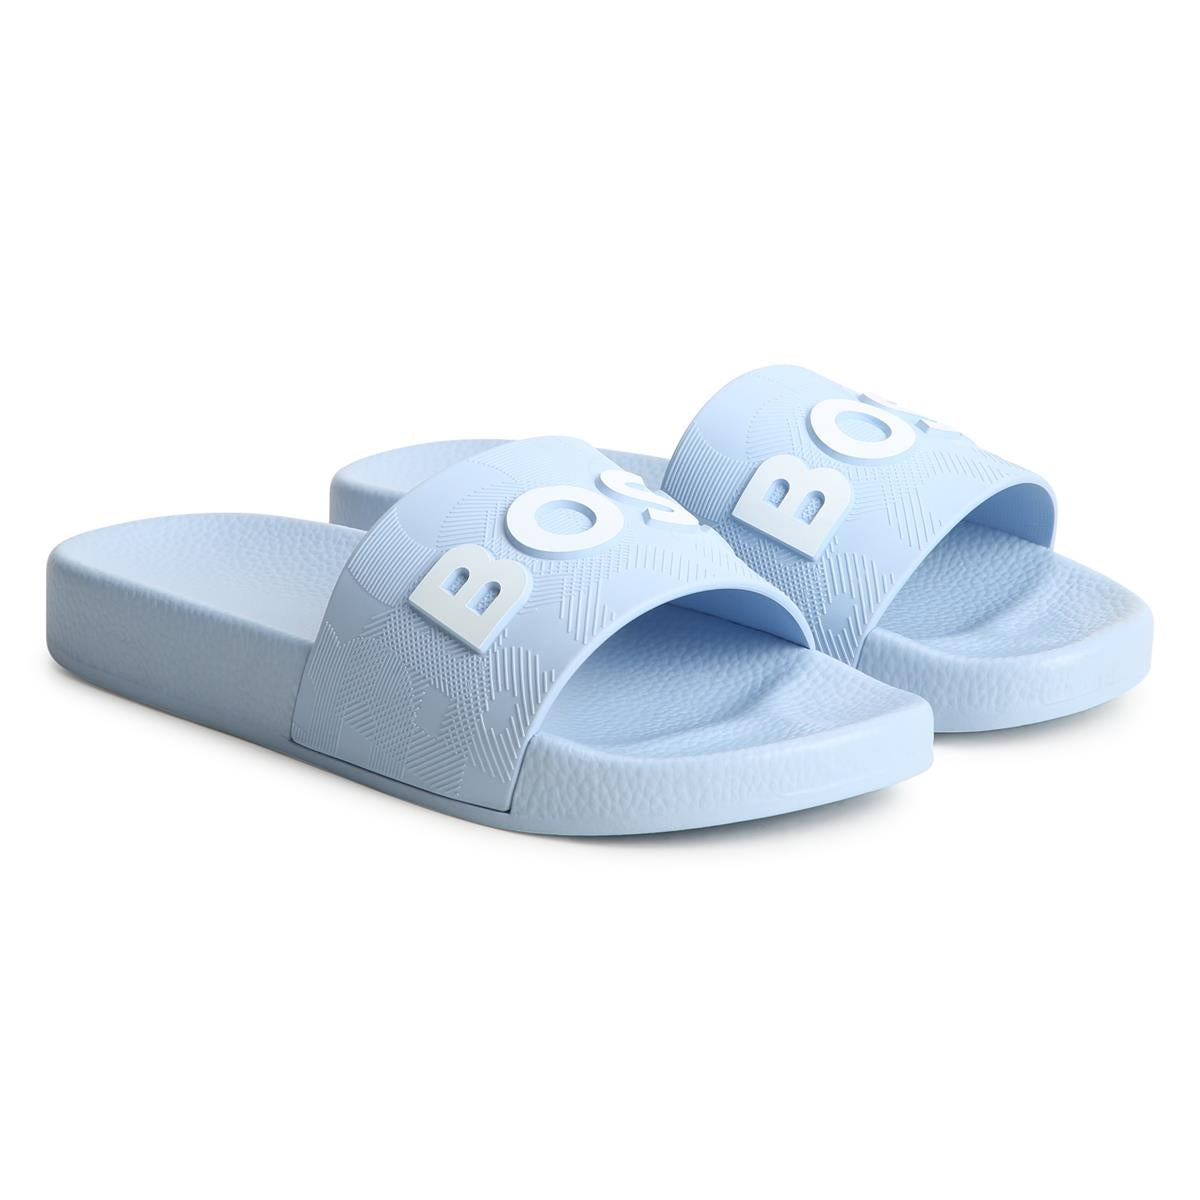 Boys Light Blue Sandals